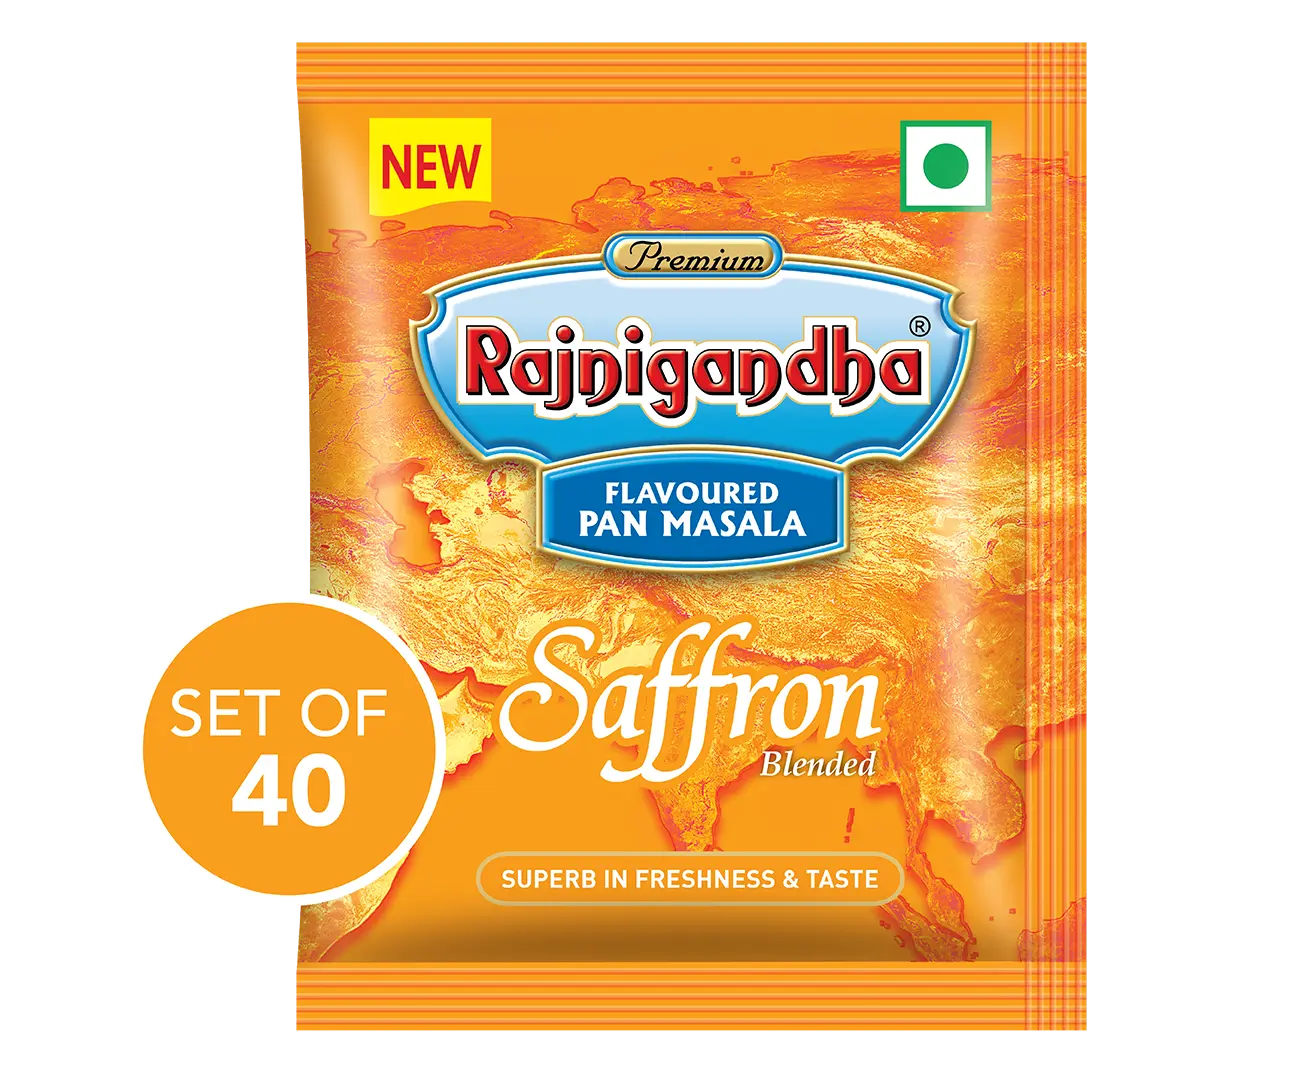 Rajnigandha Saffron ₹ 10.00 Pack